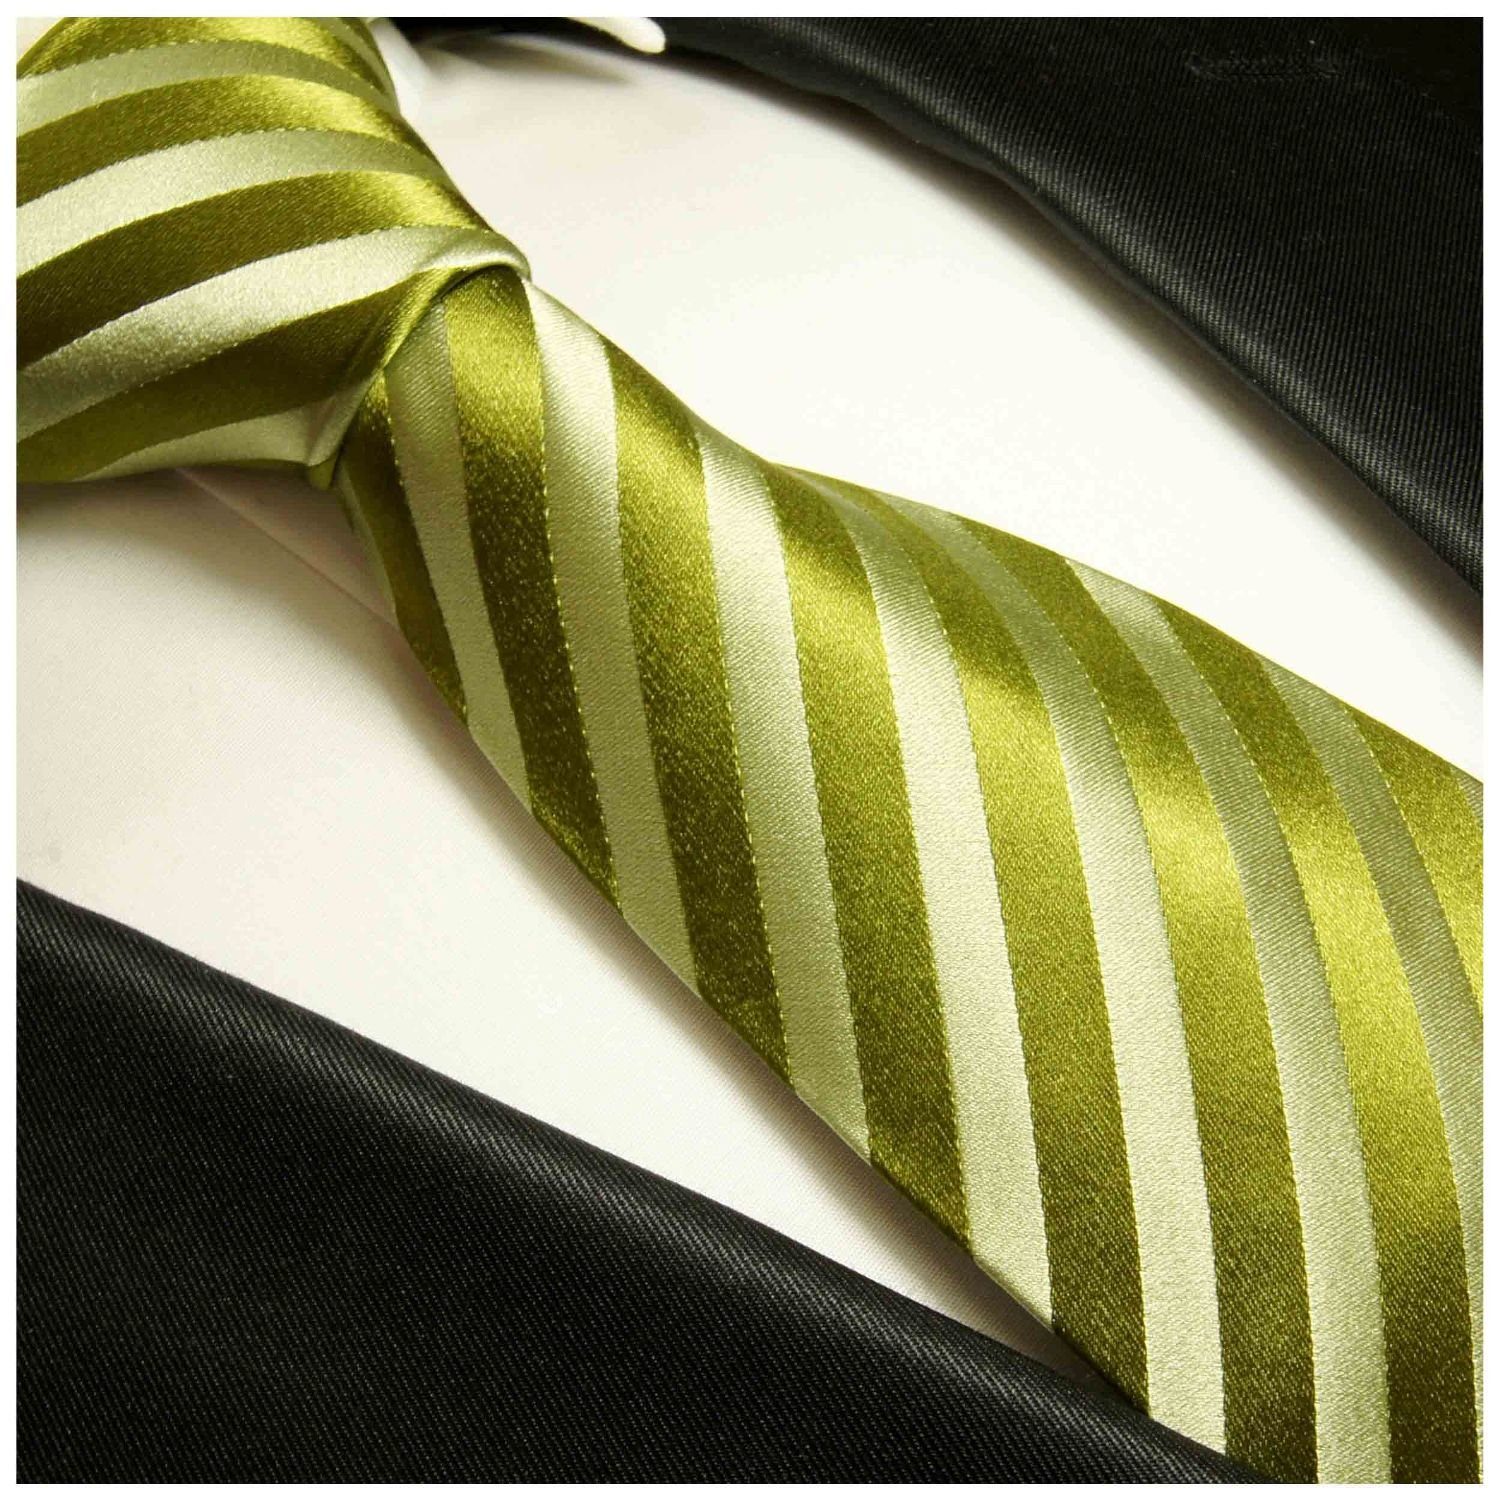 Paul Malone Krawatte Moderne grün 100% Herren (6cm), 984 gestreift Schmal Seidenkrawatte Seide